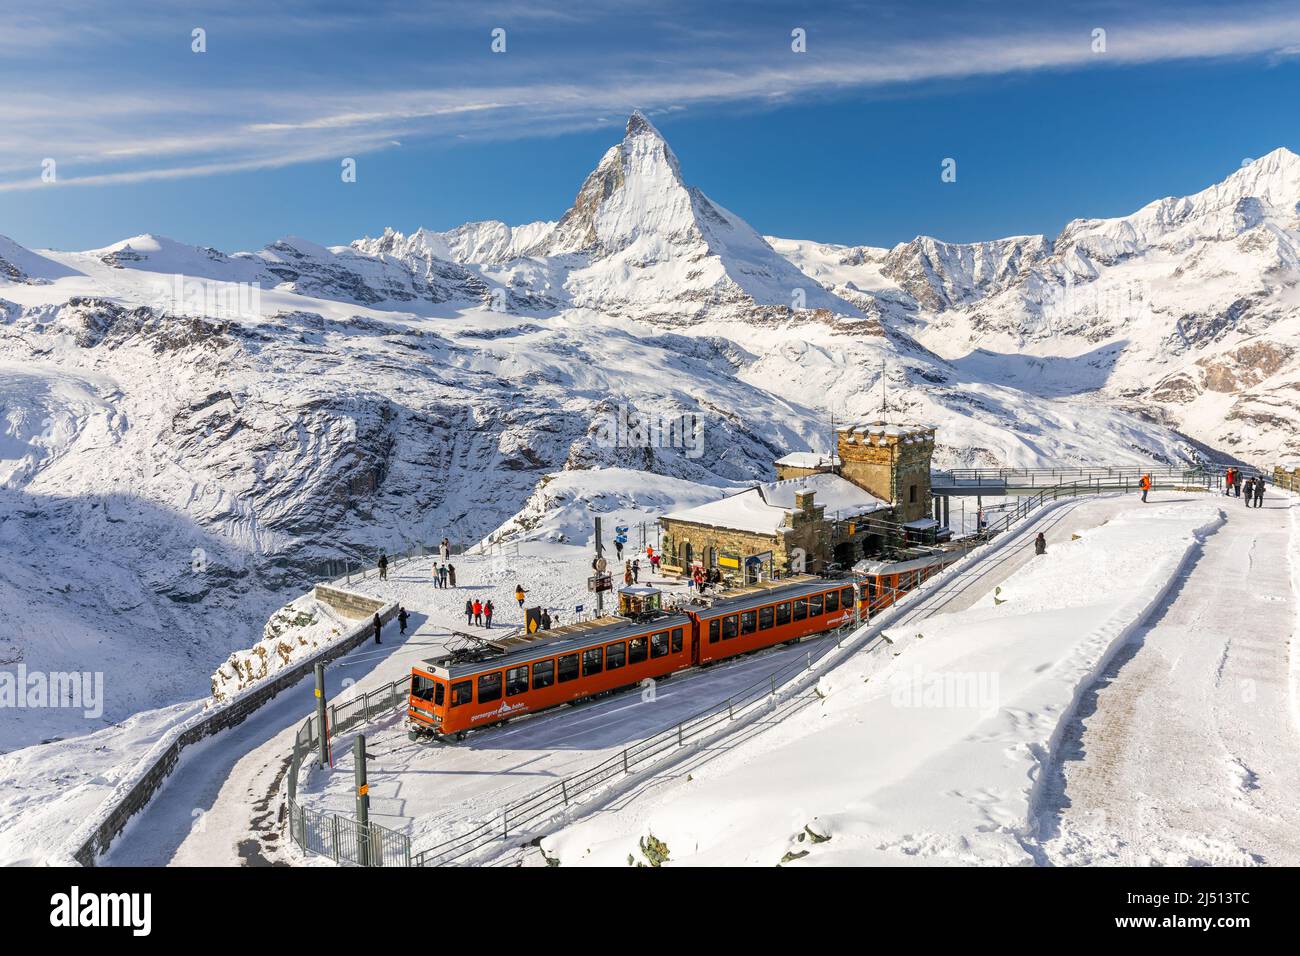 Gornergrat, Zermatt, Switzerland - November 12, 2019: Red cable car train  on snowy railway at summit station with tourists and Matterhorn summit in  wi Stock Photo - Alamy